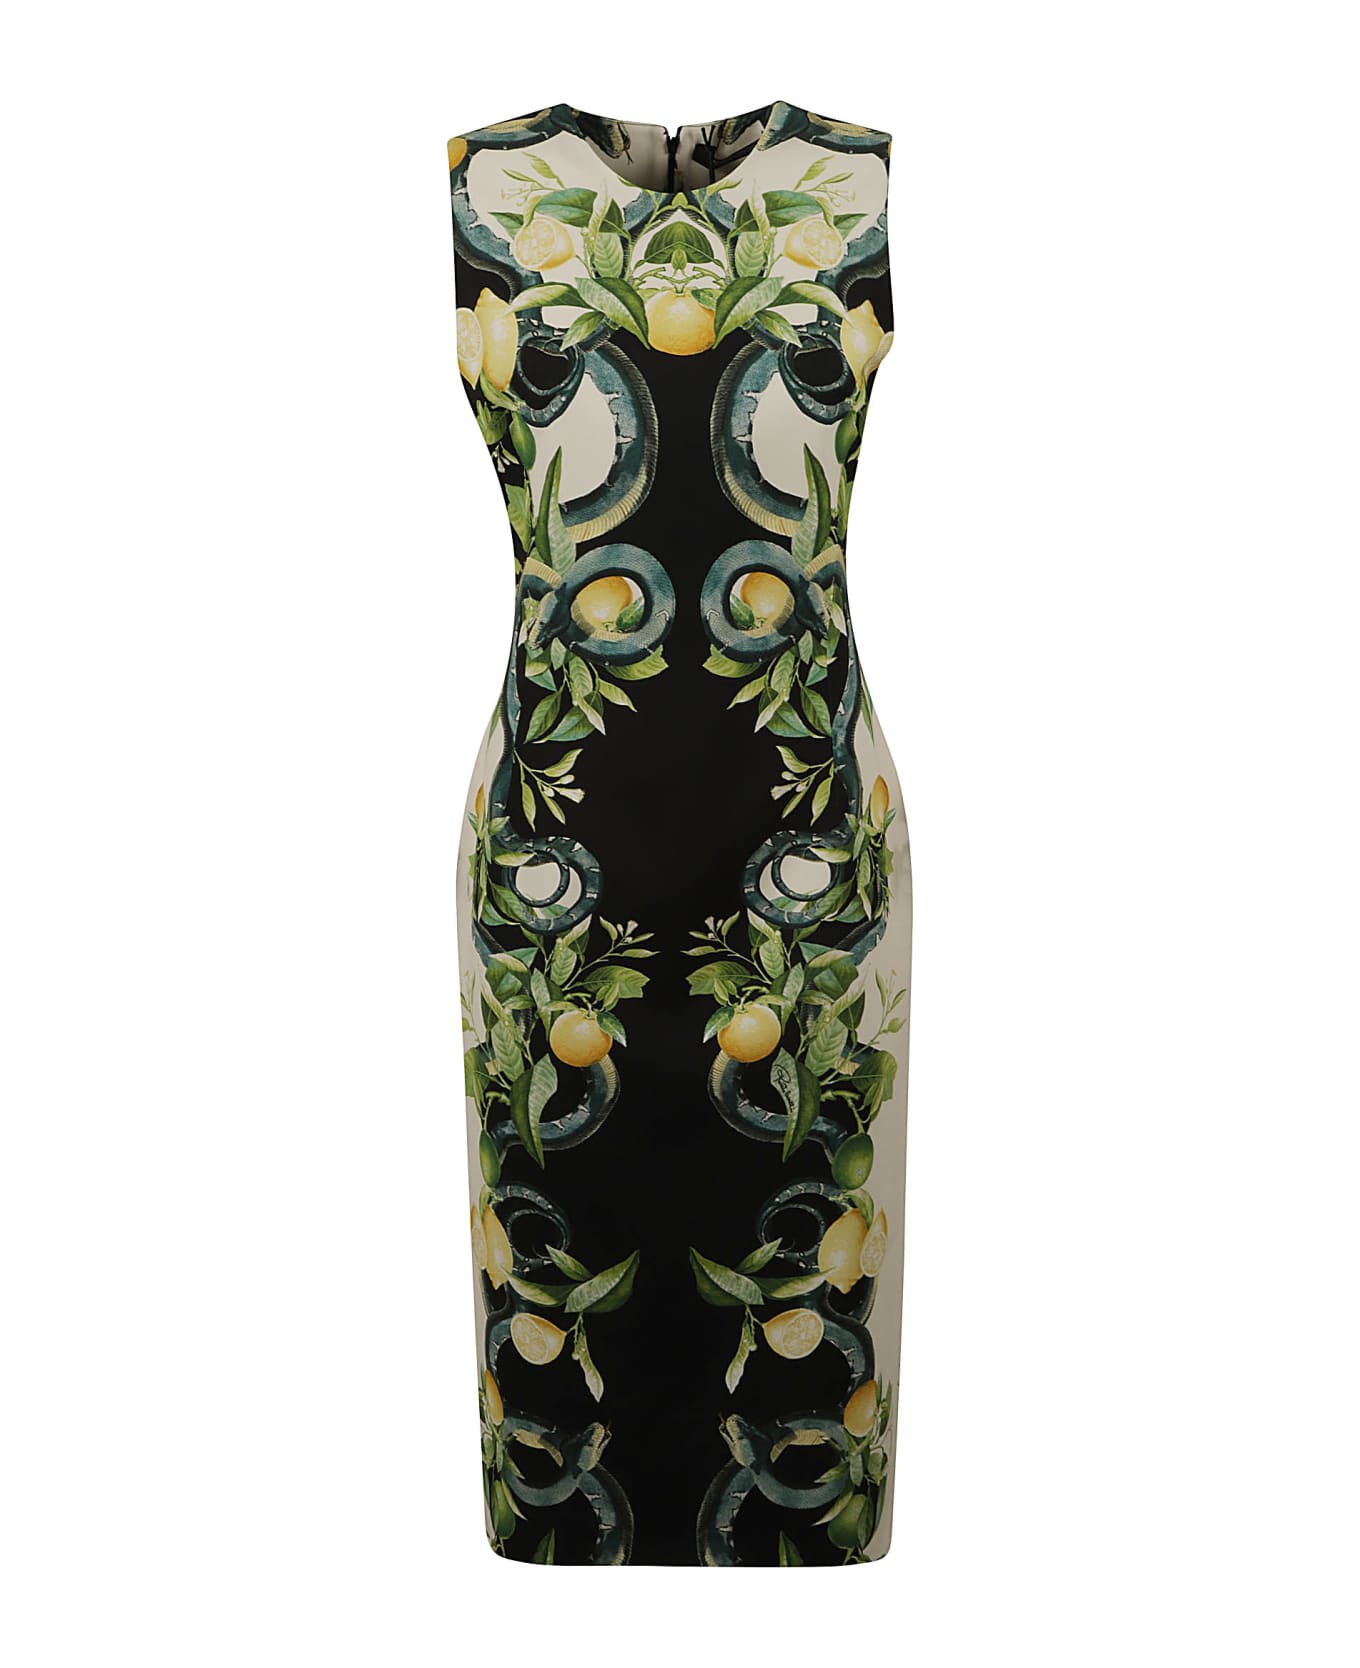 Roberto Cavalli Lemon Snake Printed Sleeveless Dress - NERO 191101